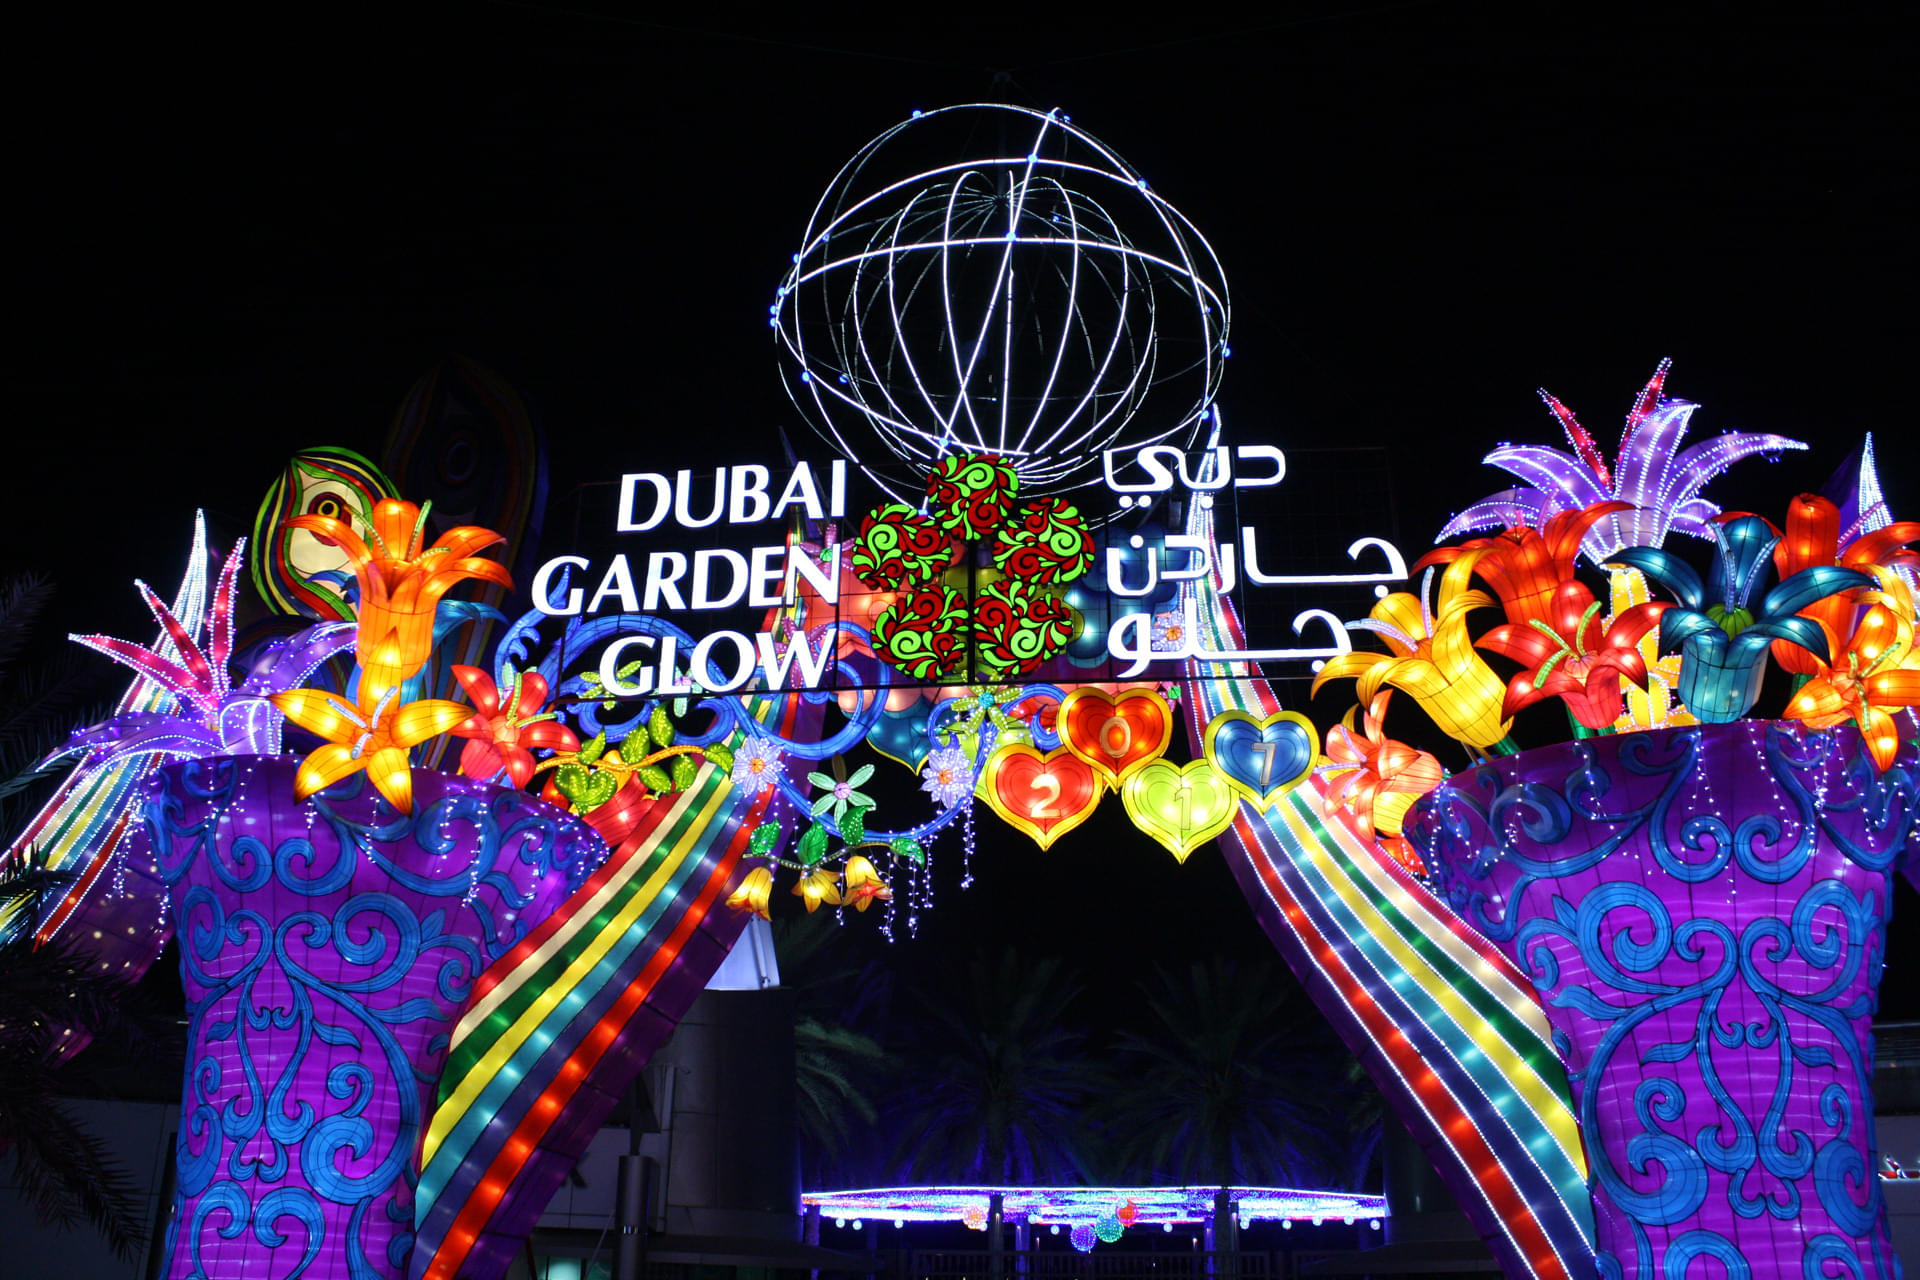 Dubai Garden Glow Tickets